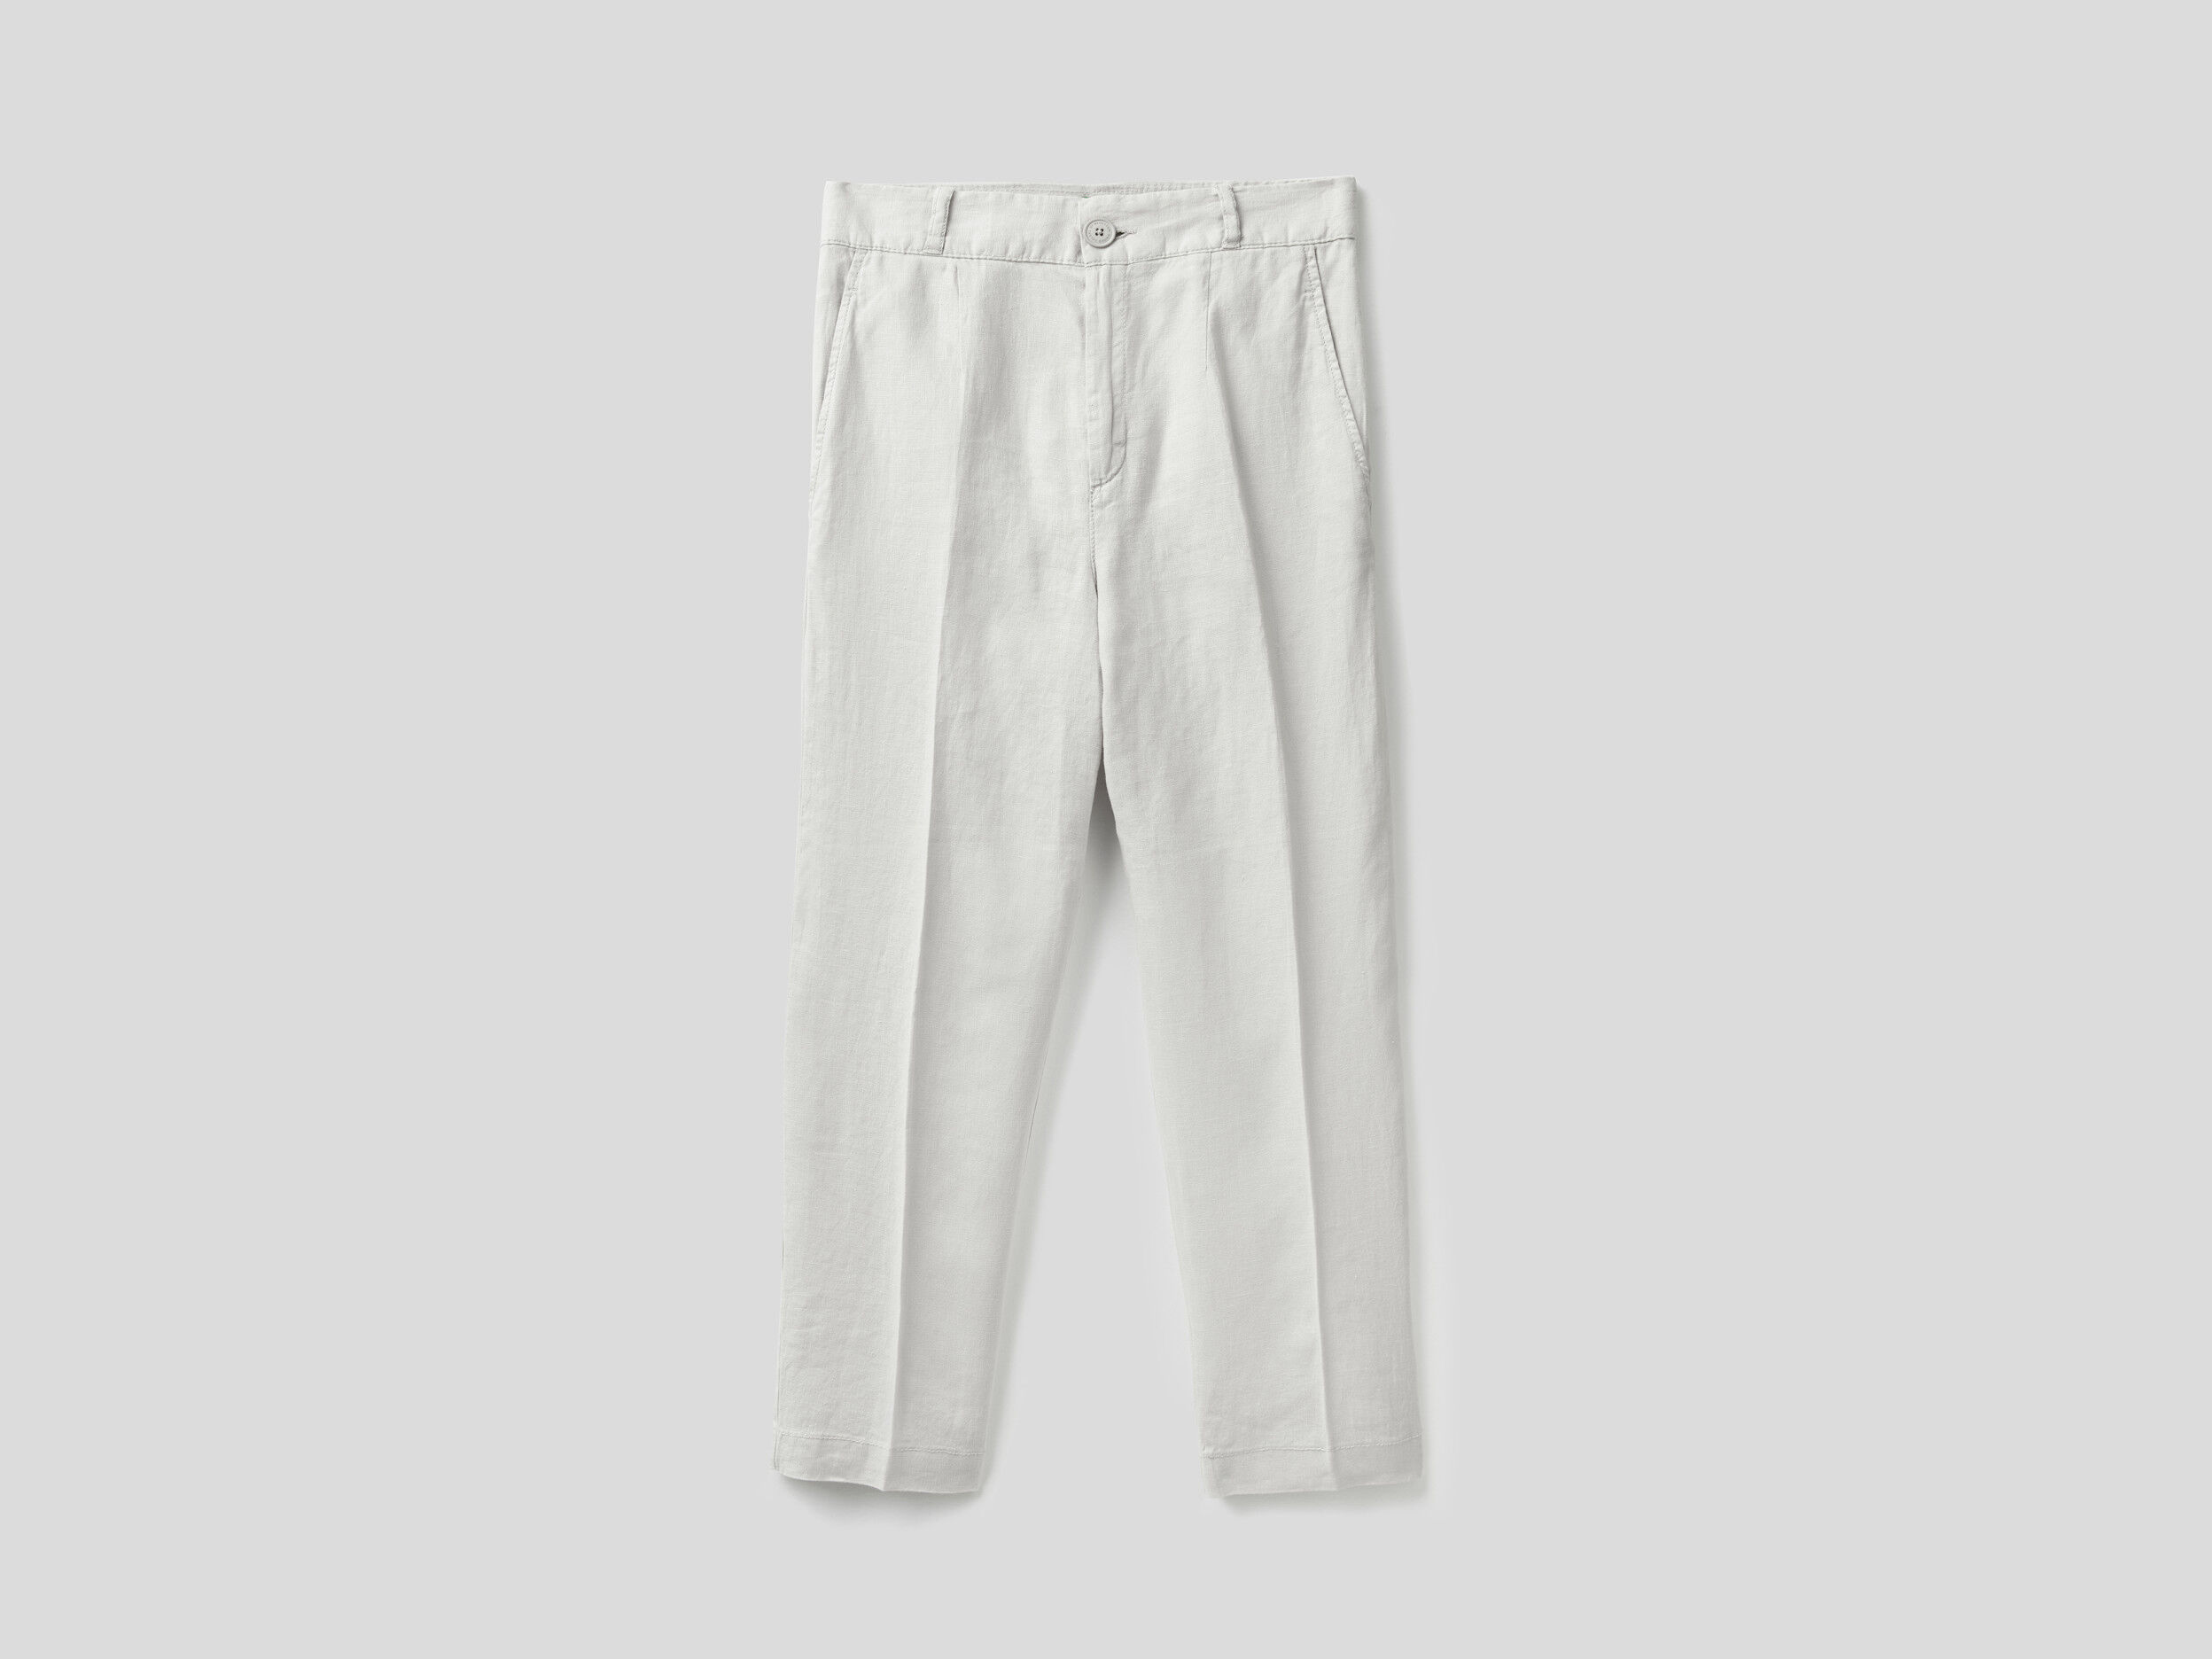 Pastel Grey Linen Pants - | Hangrr | Brown cotton pants, Linen pants,  Custom design shirts